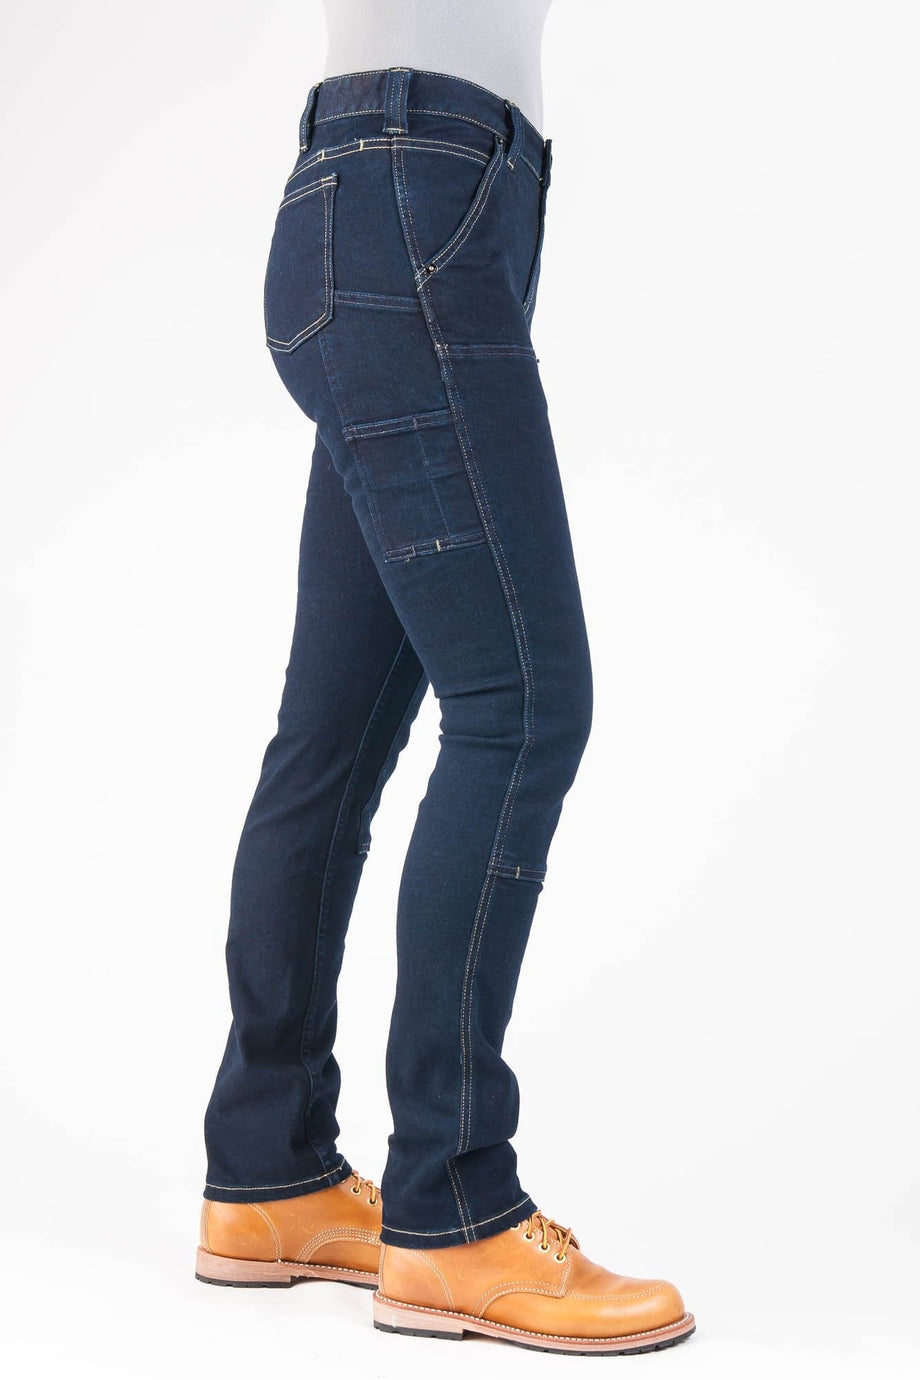 Womens Dovetail Workwear Maven Slim Pants. Size 10/28 (Short